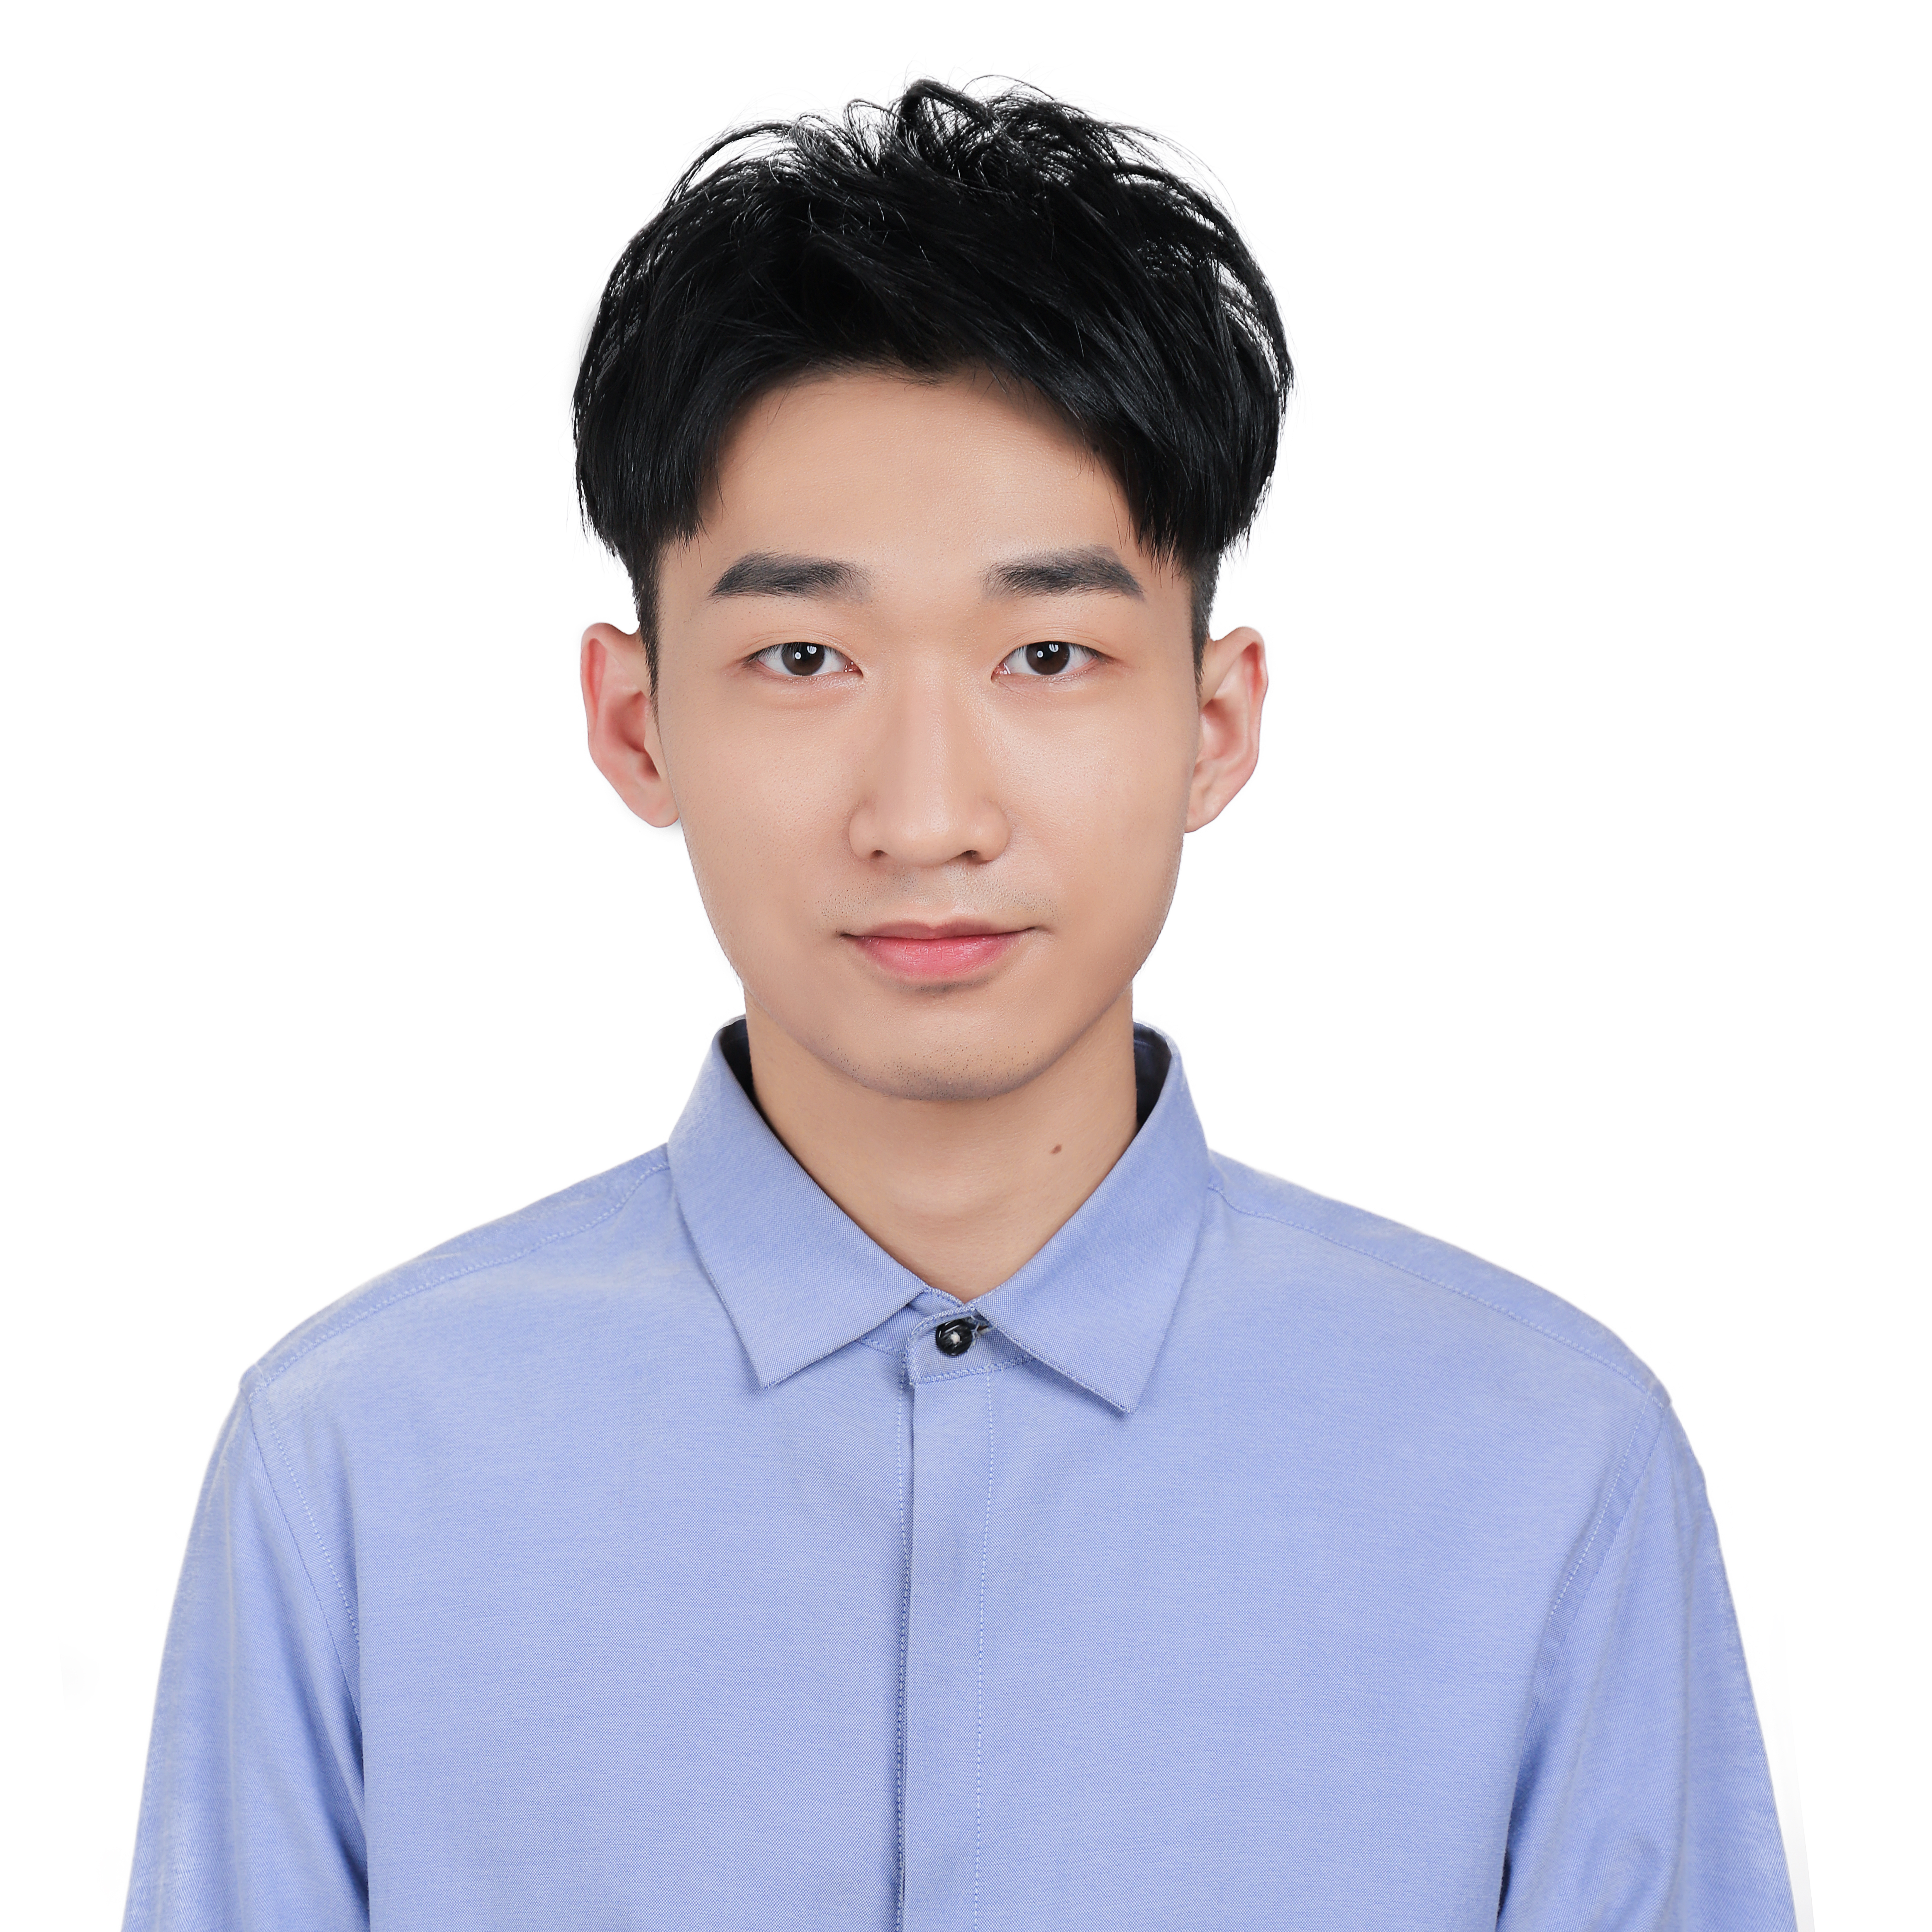 Zhili Zeng's profile picture